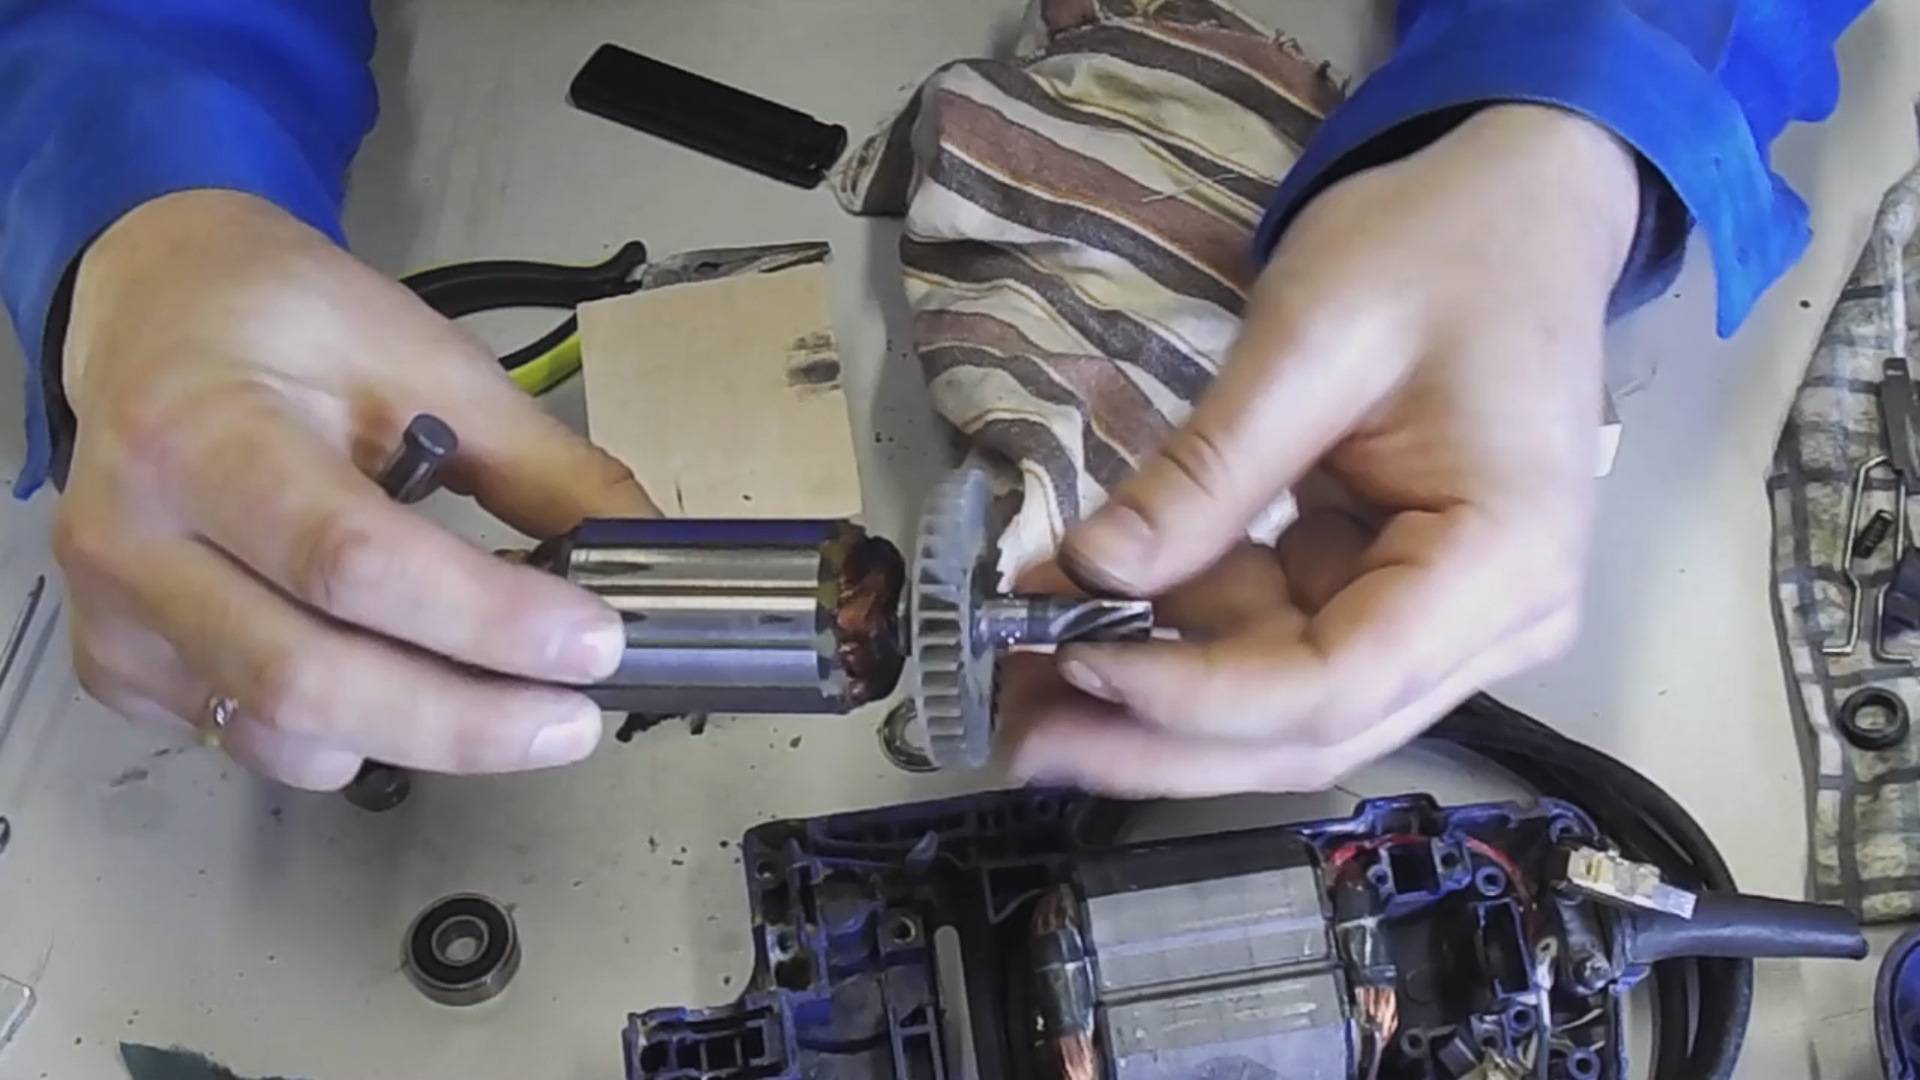 Ремонт электрического лобзика своими руками: электролобзика, видео